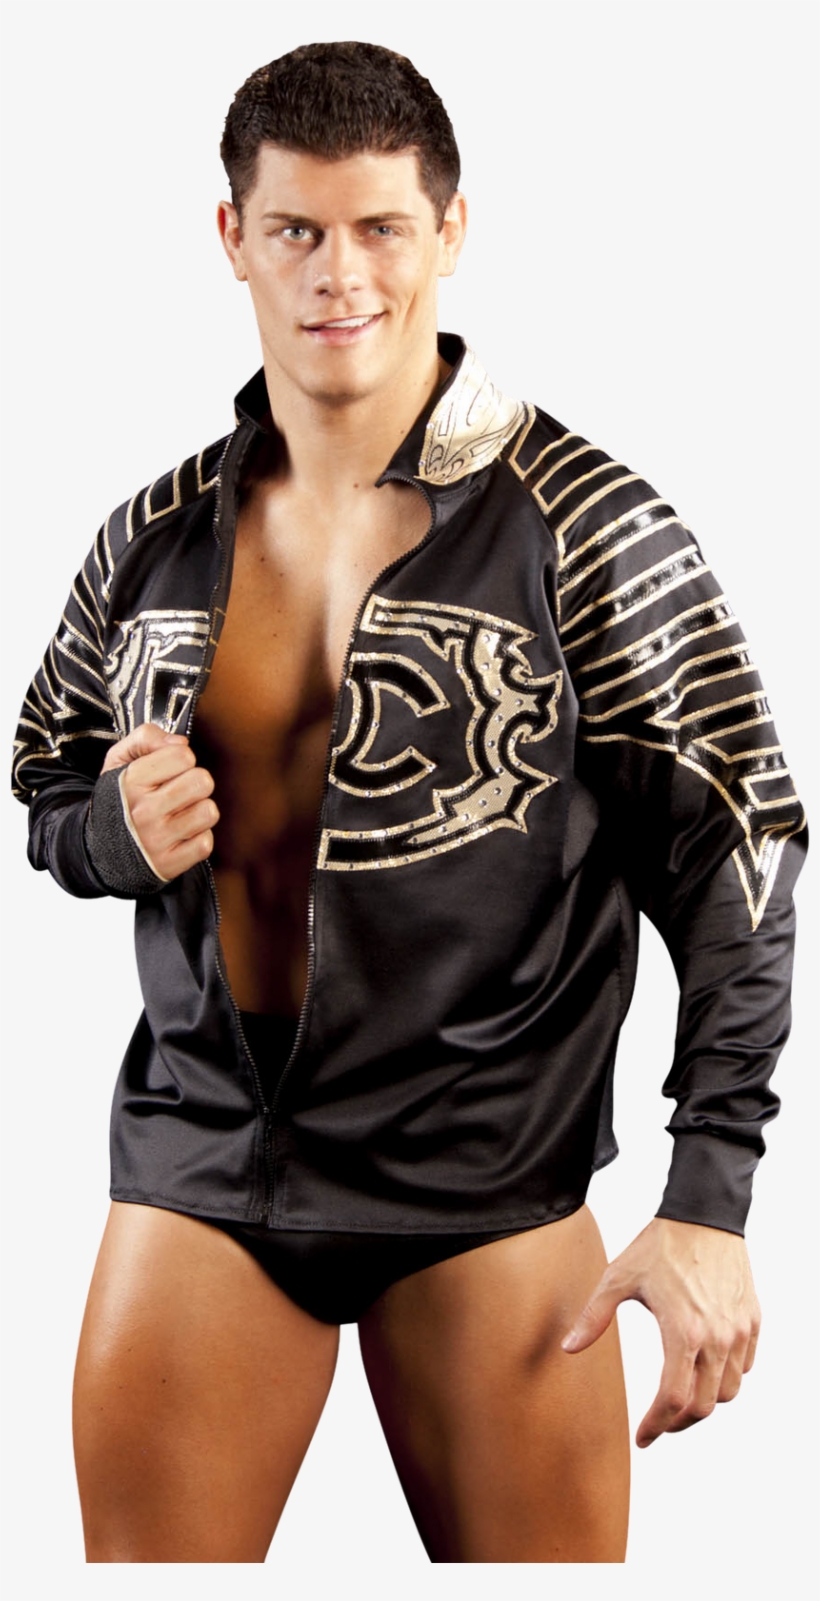 Cody Rhodes Transparent Image - Cody Rhodes 2011, transparent png #1584238